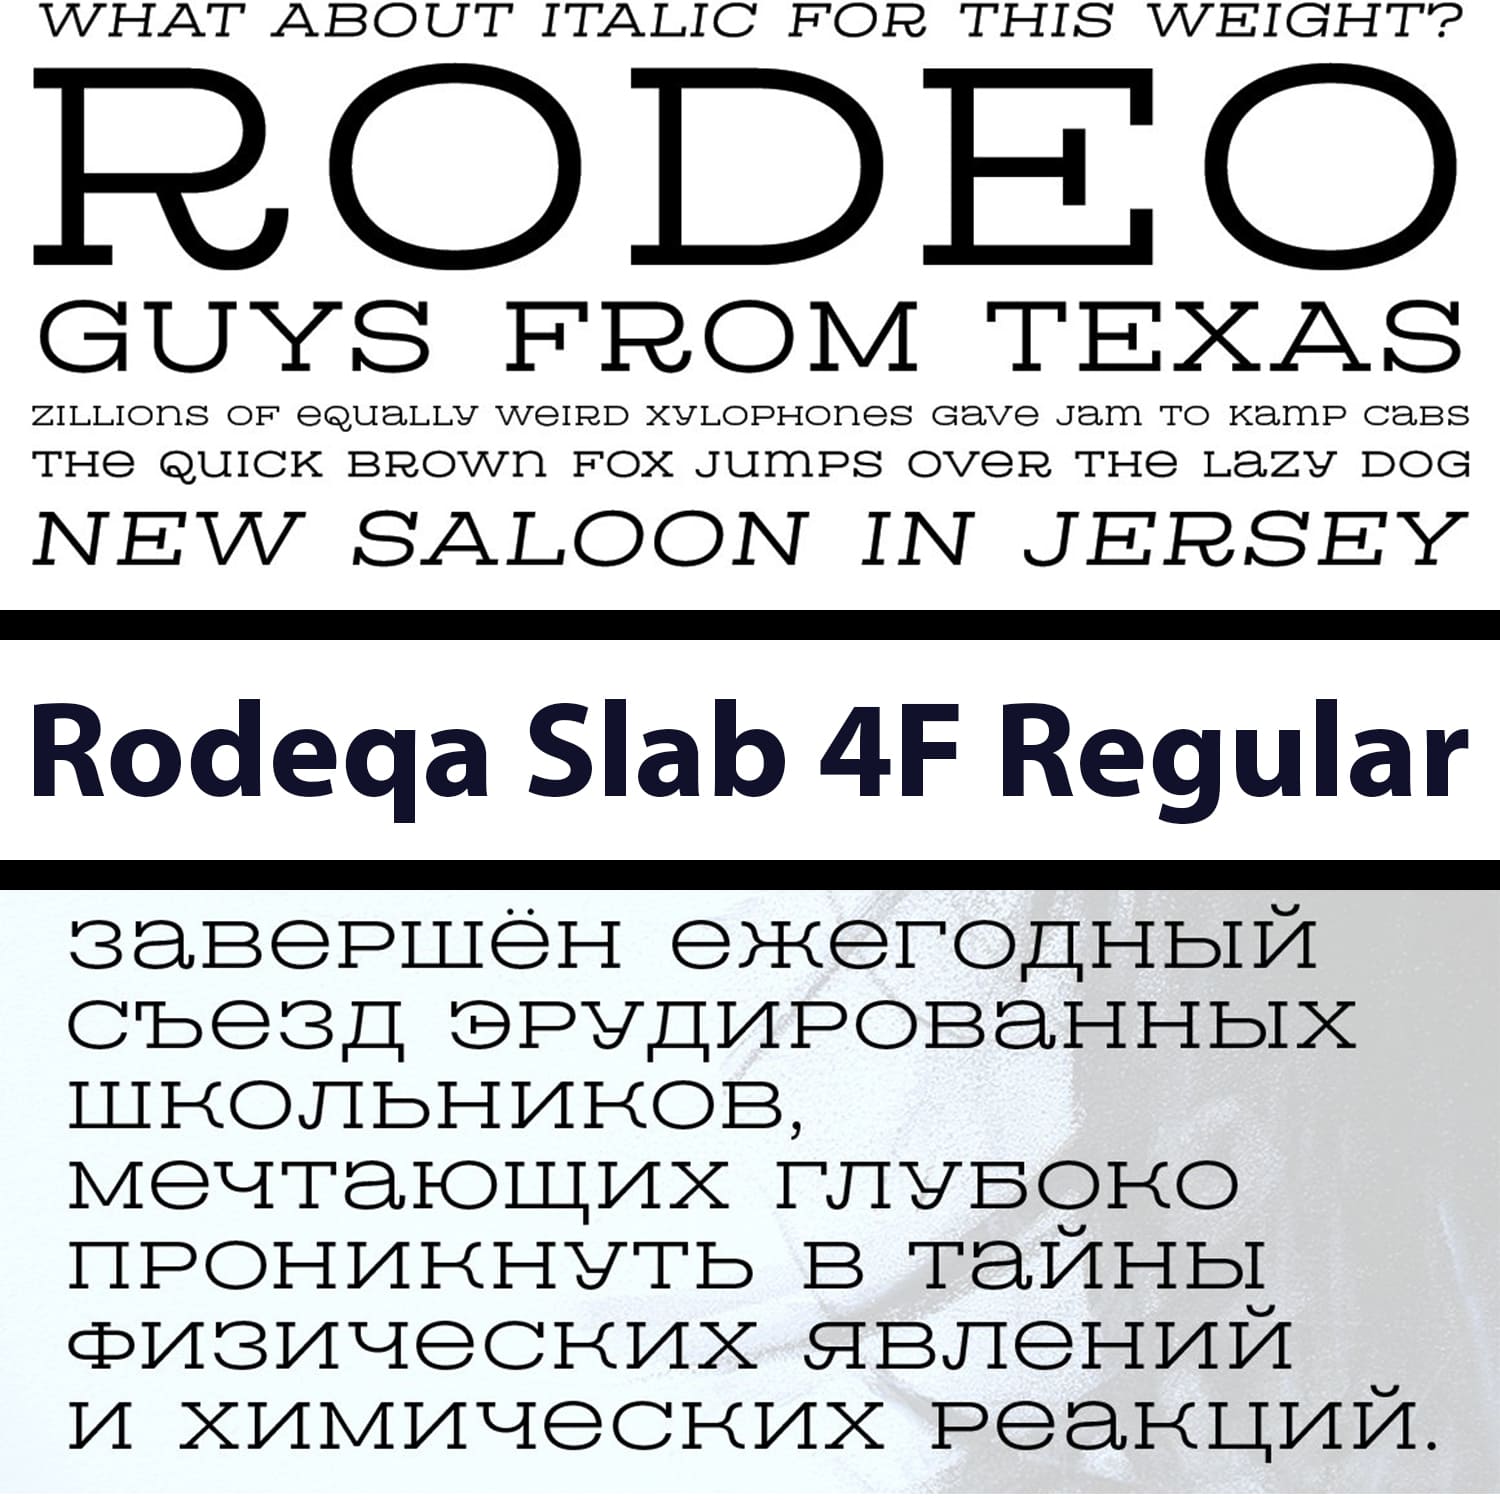 Rodeqa Slab 4F Regular main cover.